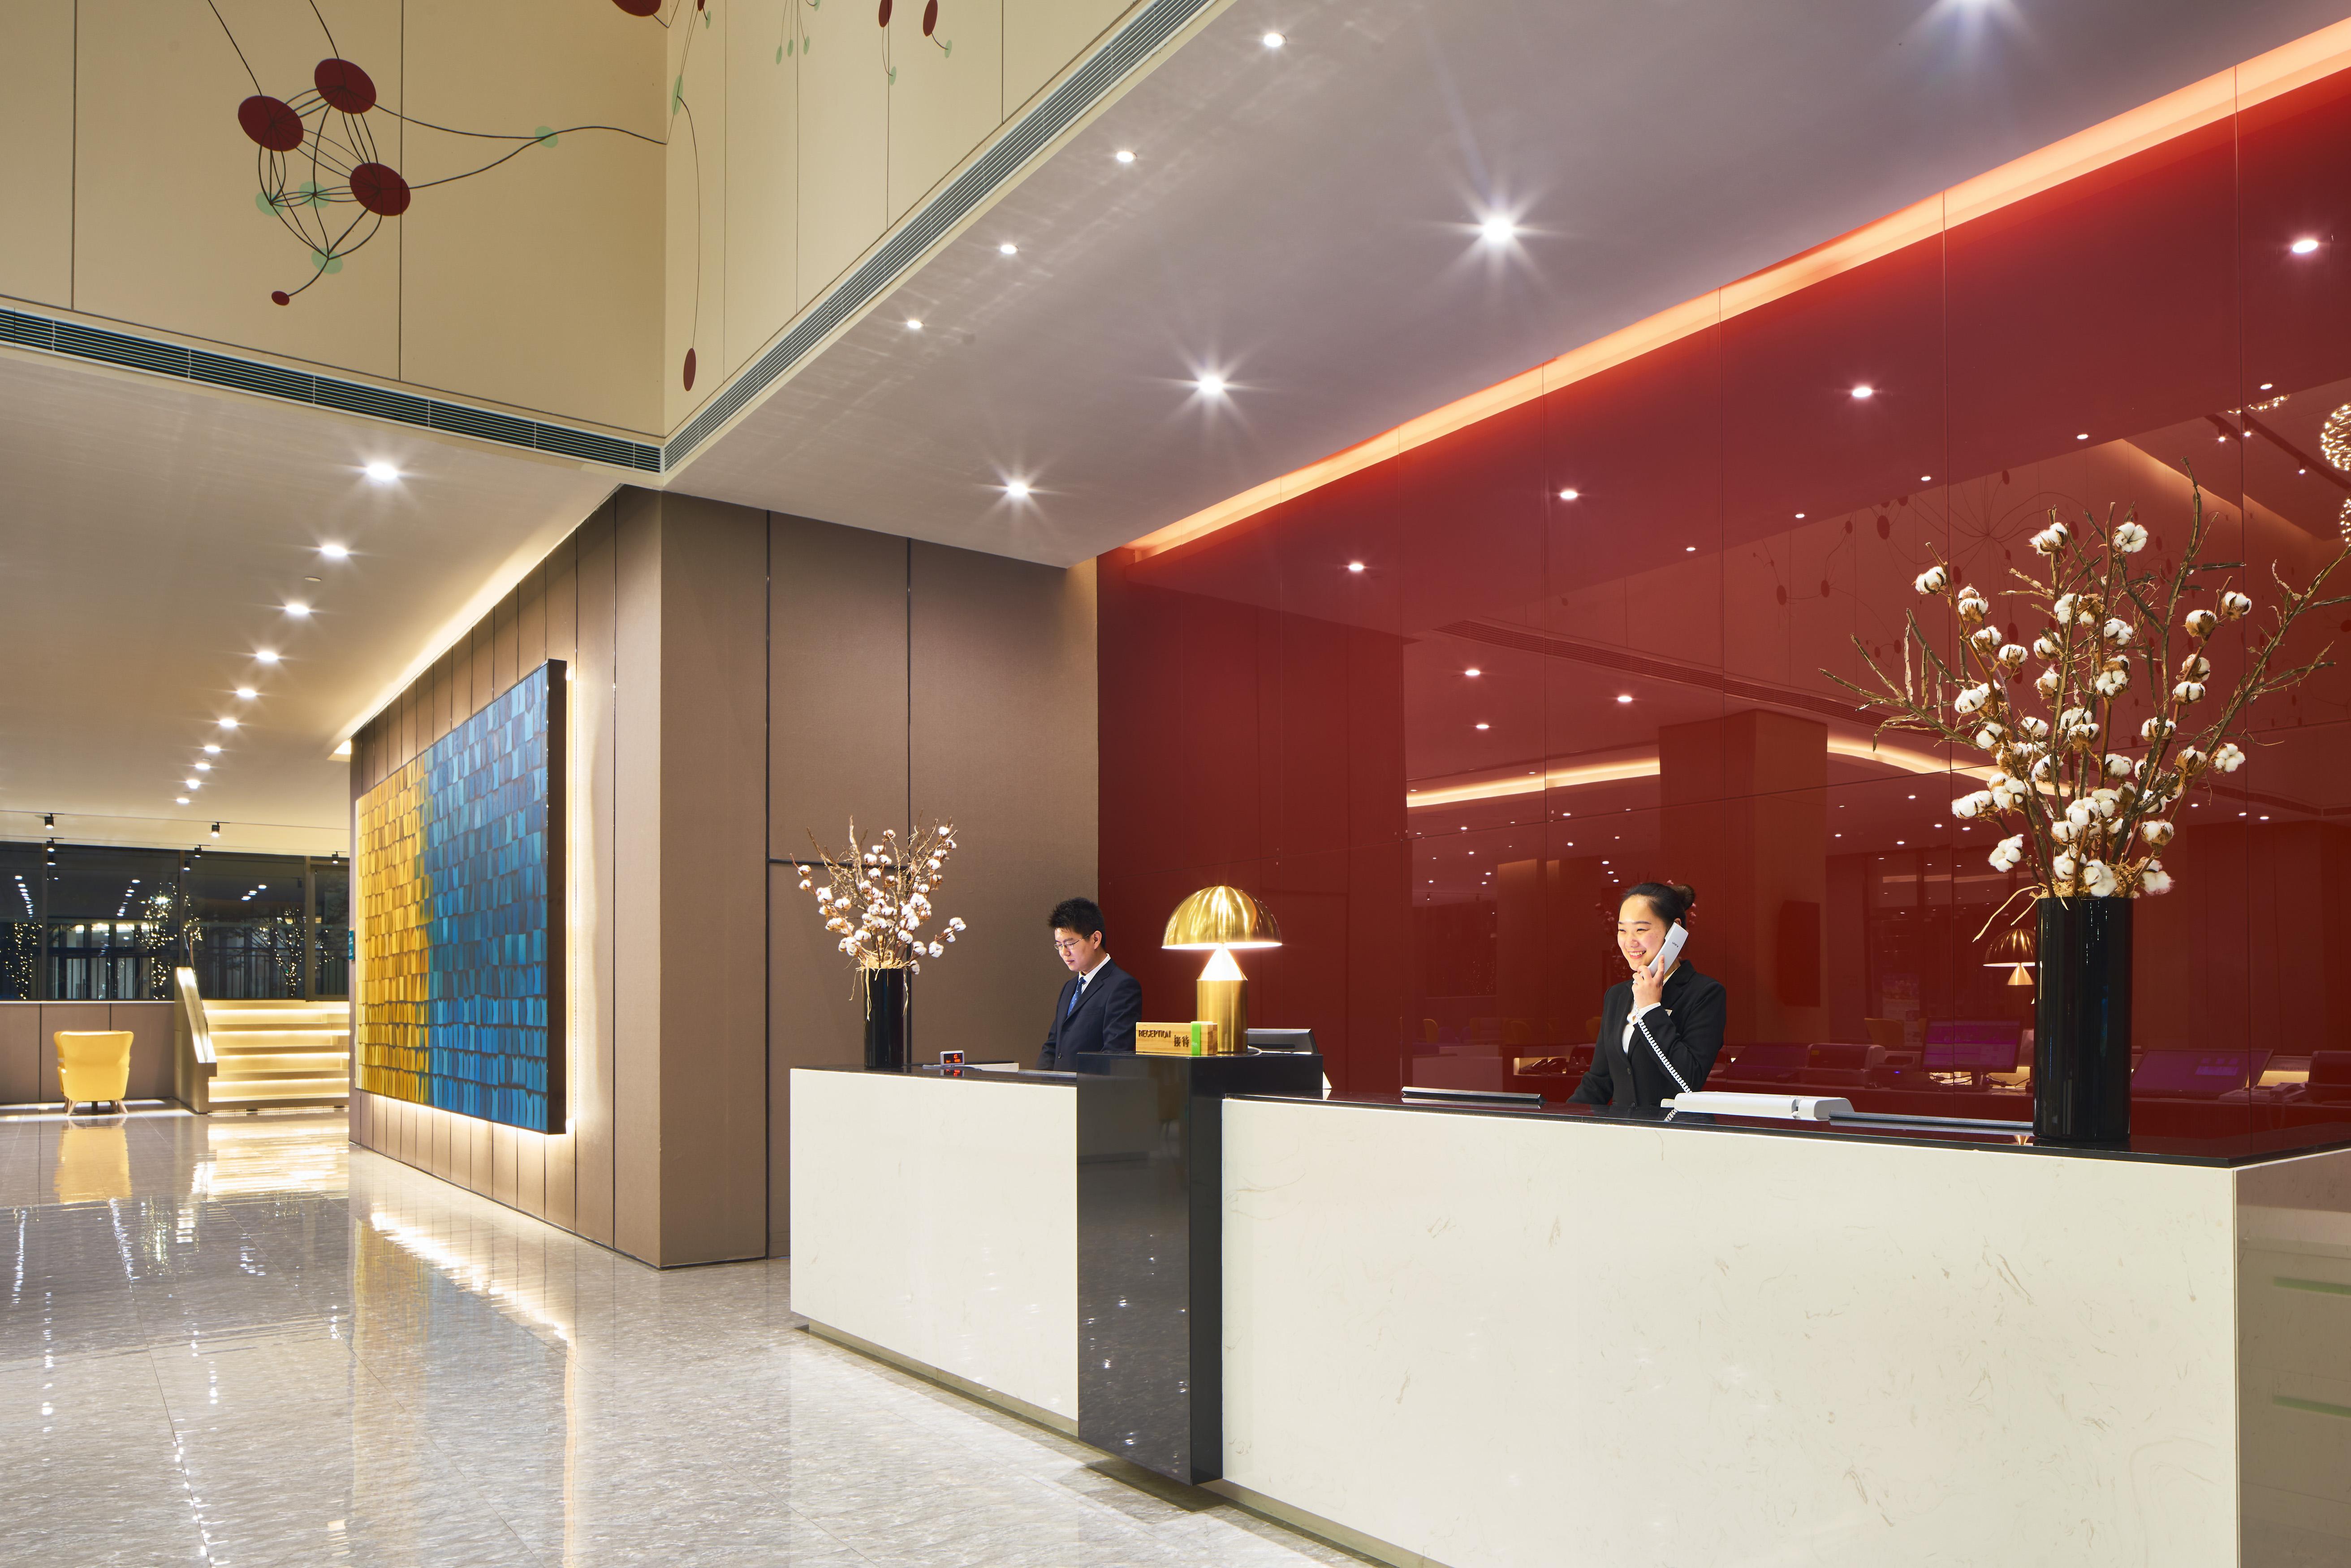 Q-Box Hotel Shanghai Sanjiagang -Offer Pudong International Airport And Disney Shuttle Kültér fotó